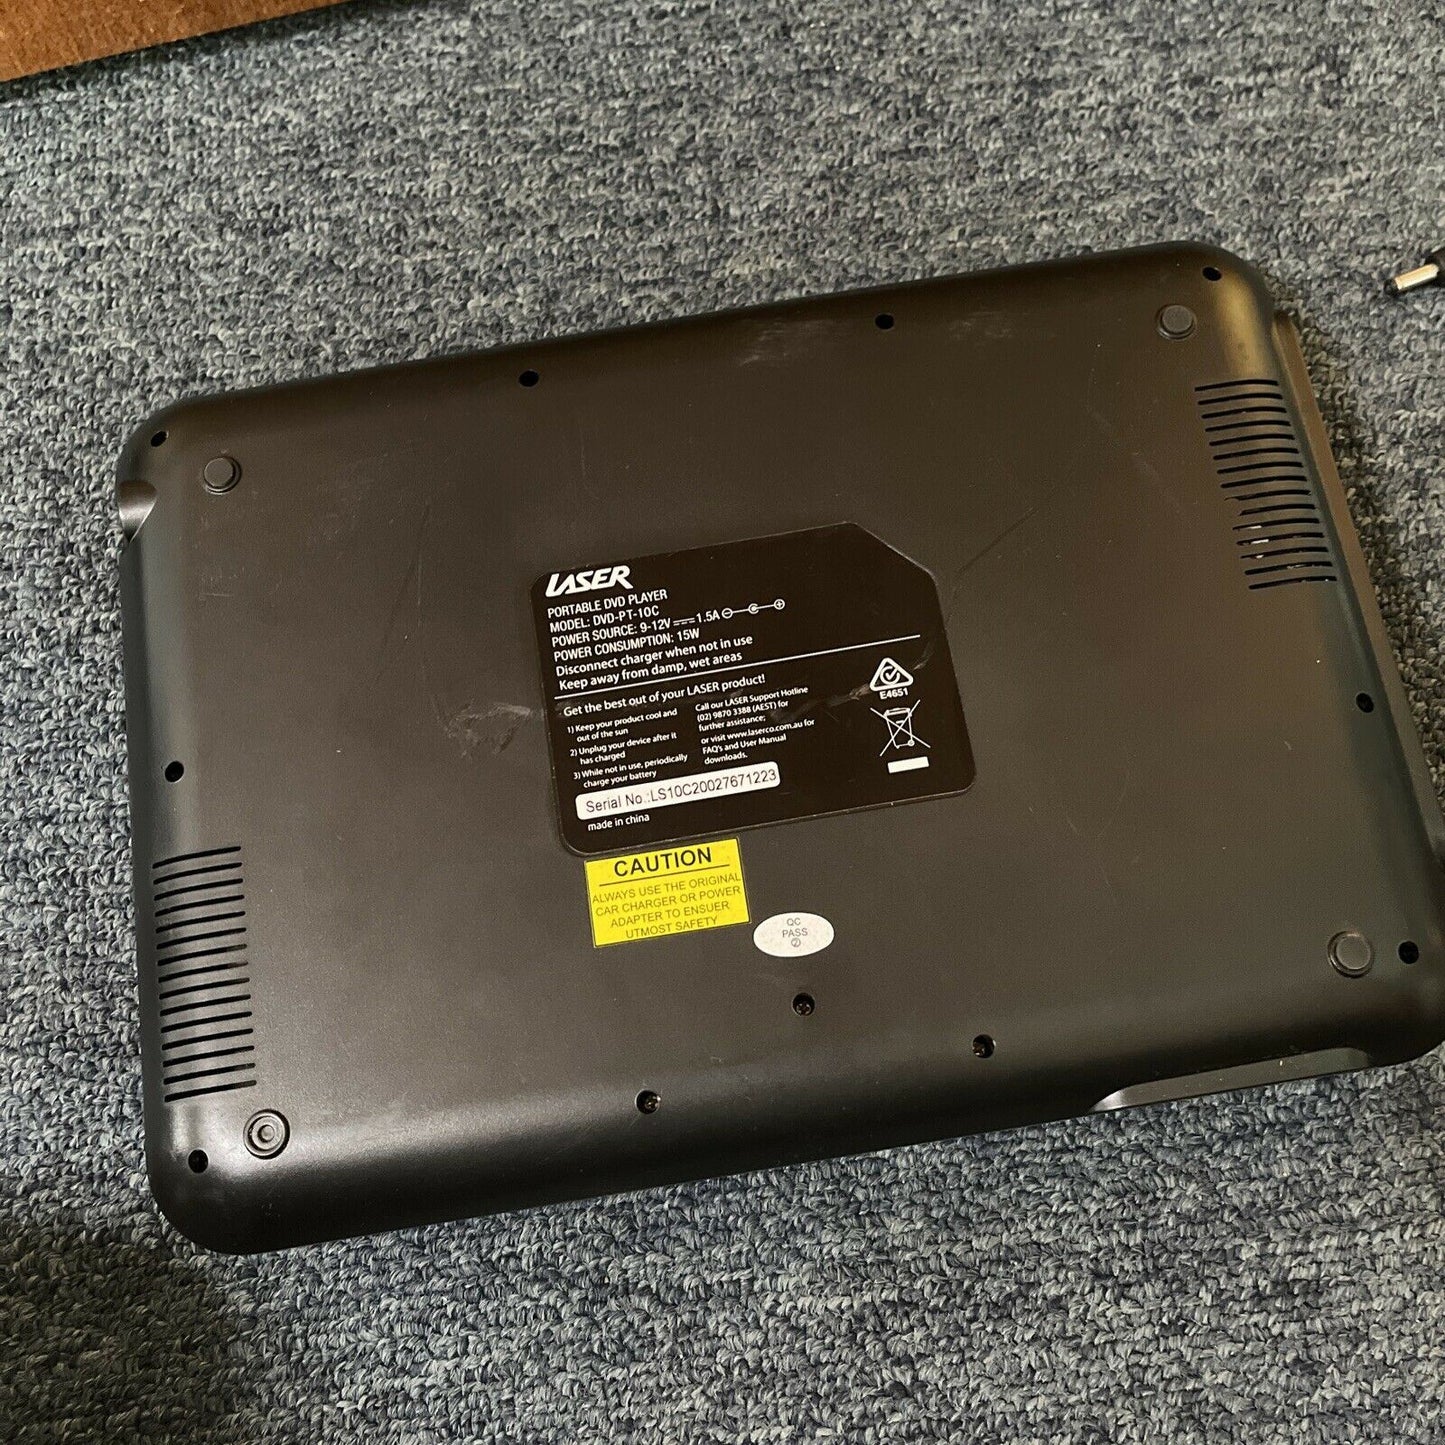 Laser 10 inch Portable DVD Player, Black - DVD-PT-10C